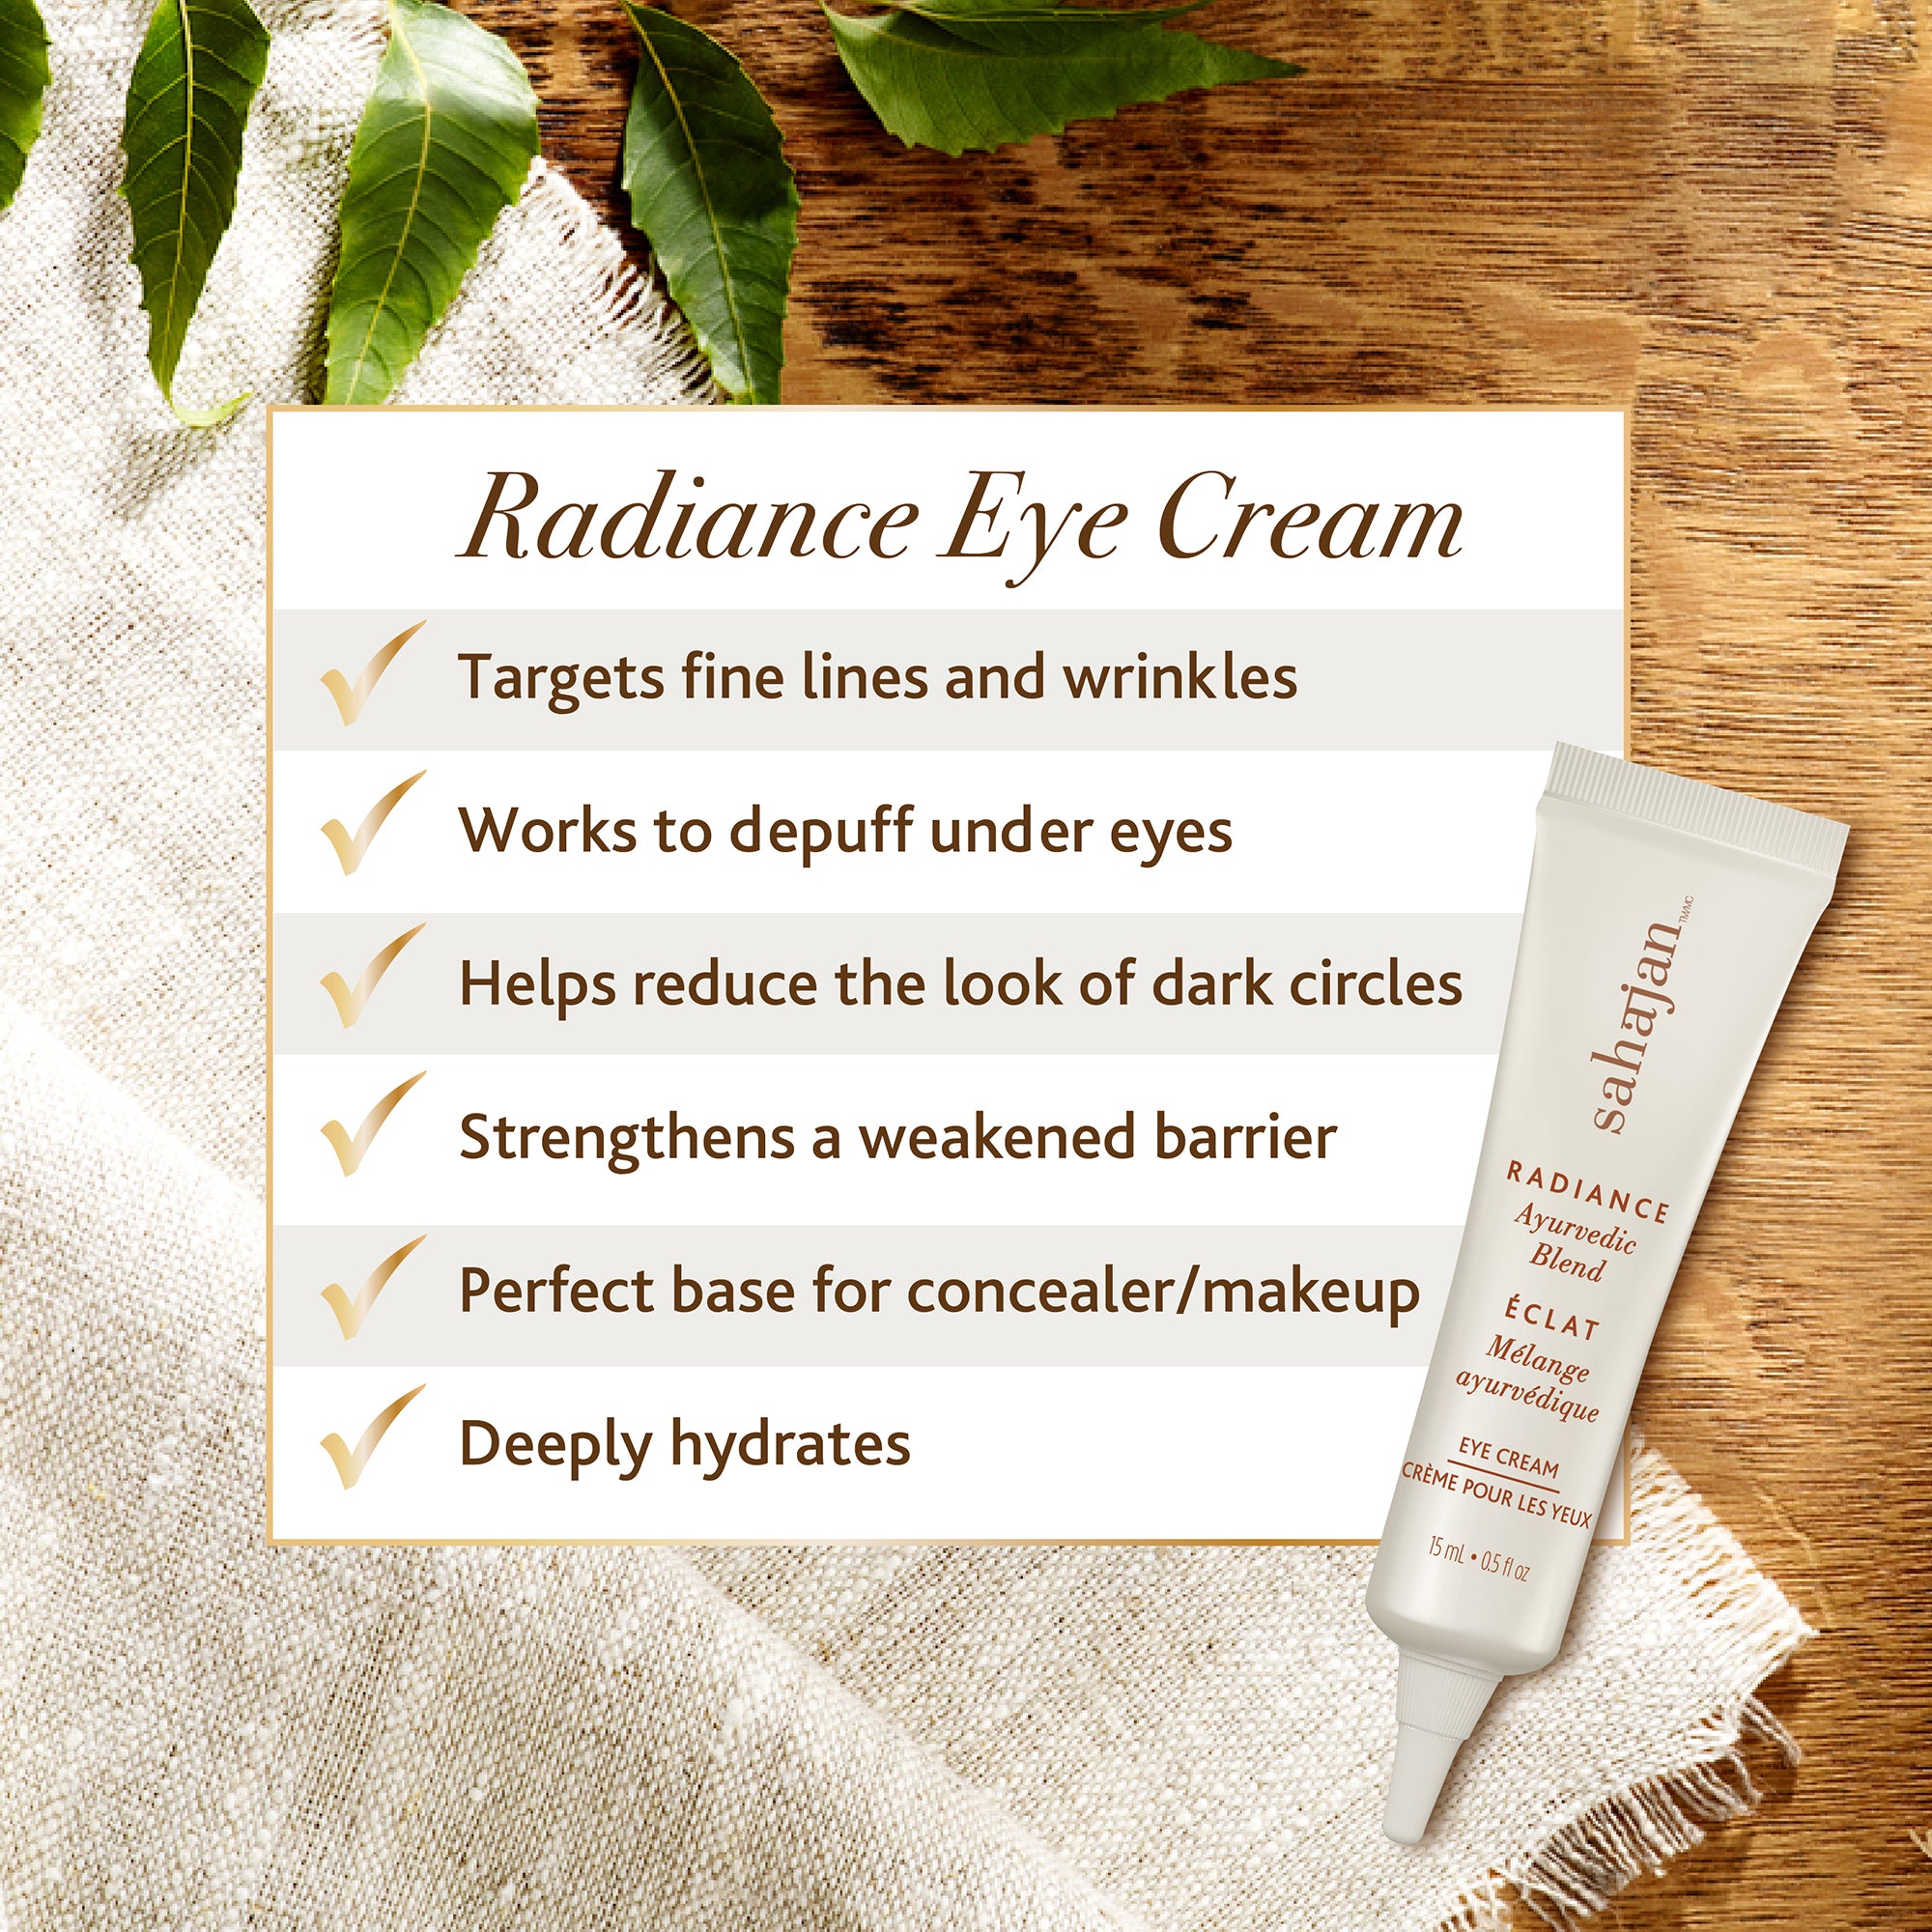 RADIANCE Eye Cream